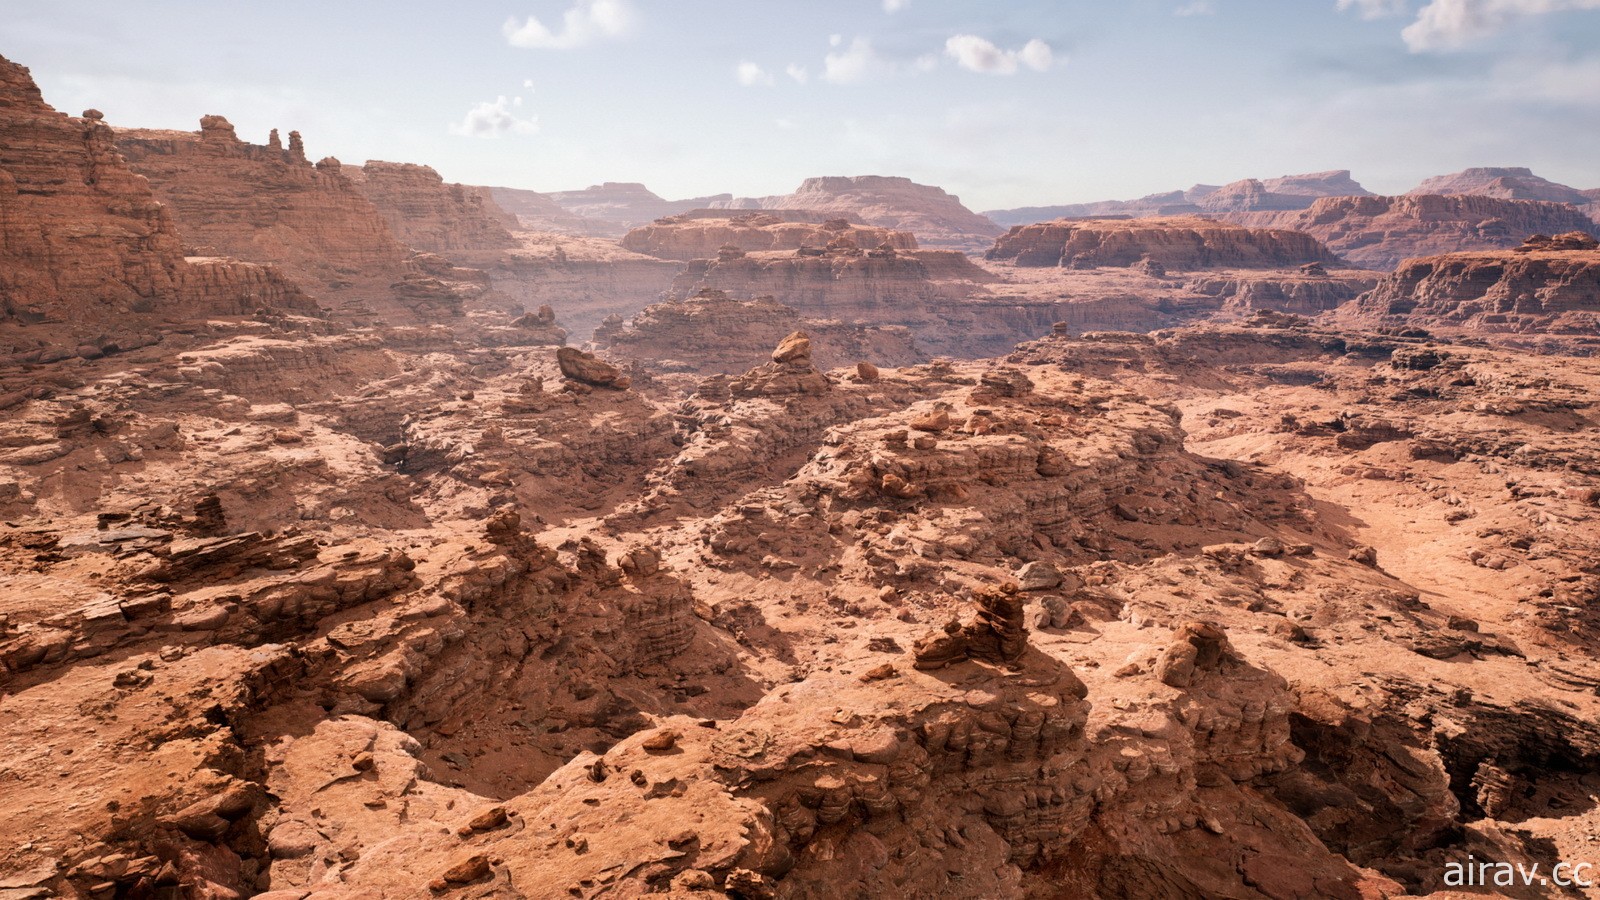 Unreal Engine 5 推出抢先体验版 正式版预定明年问世